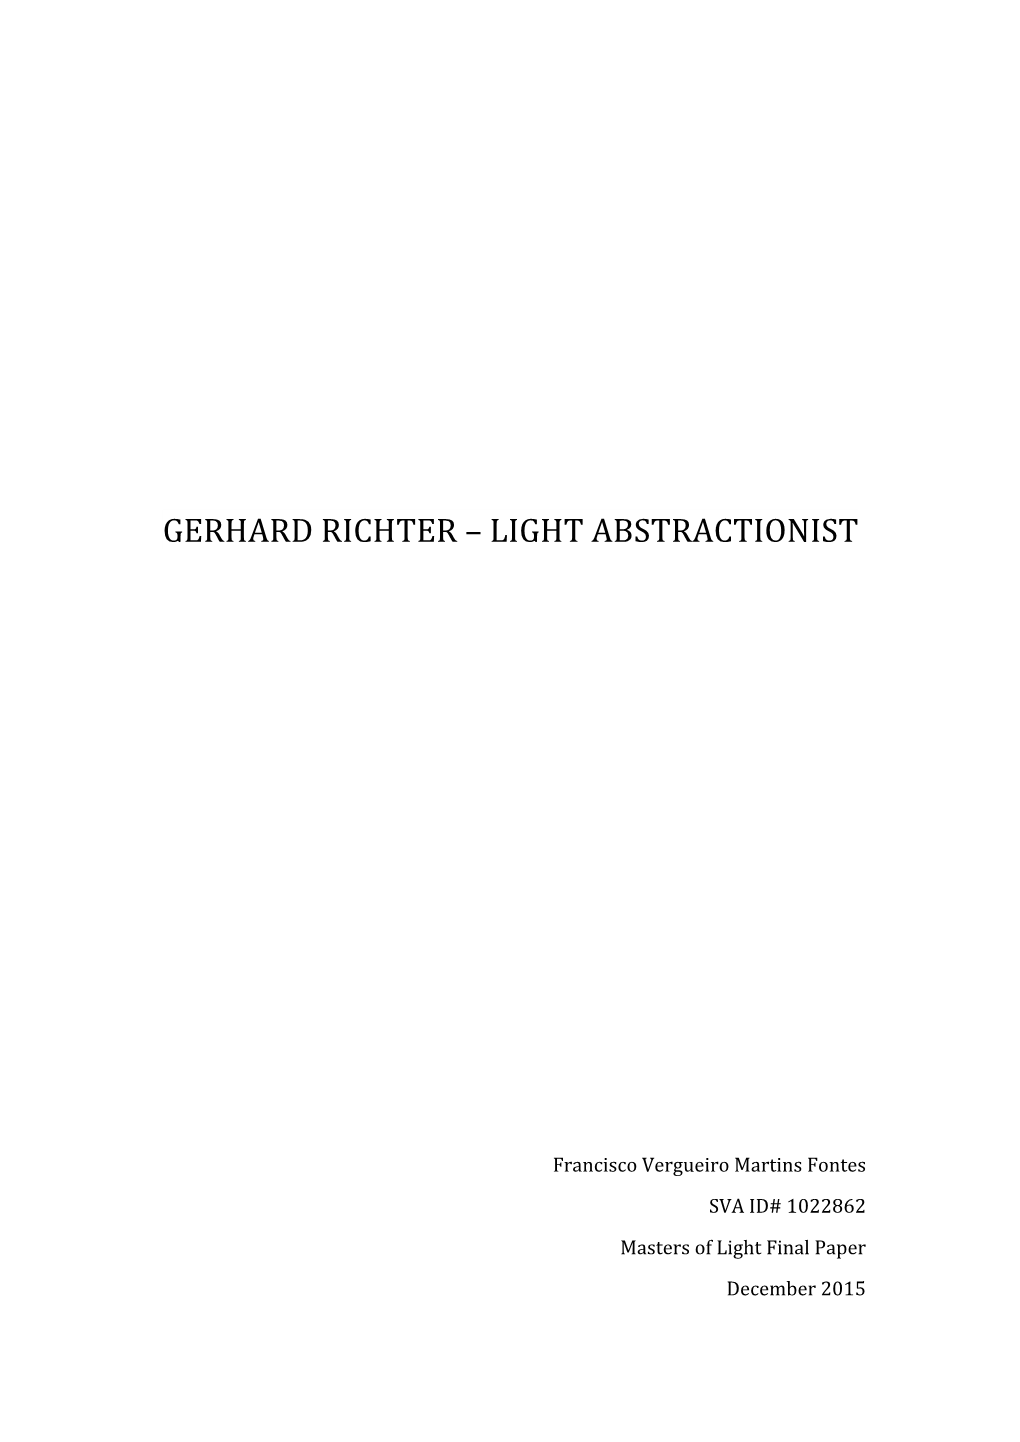 Gerhard Richter – Light Abstractionist